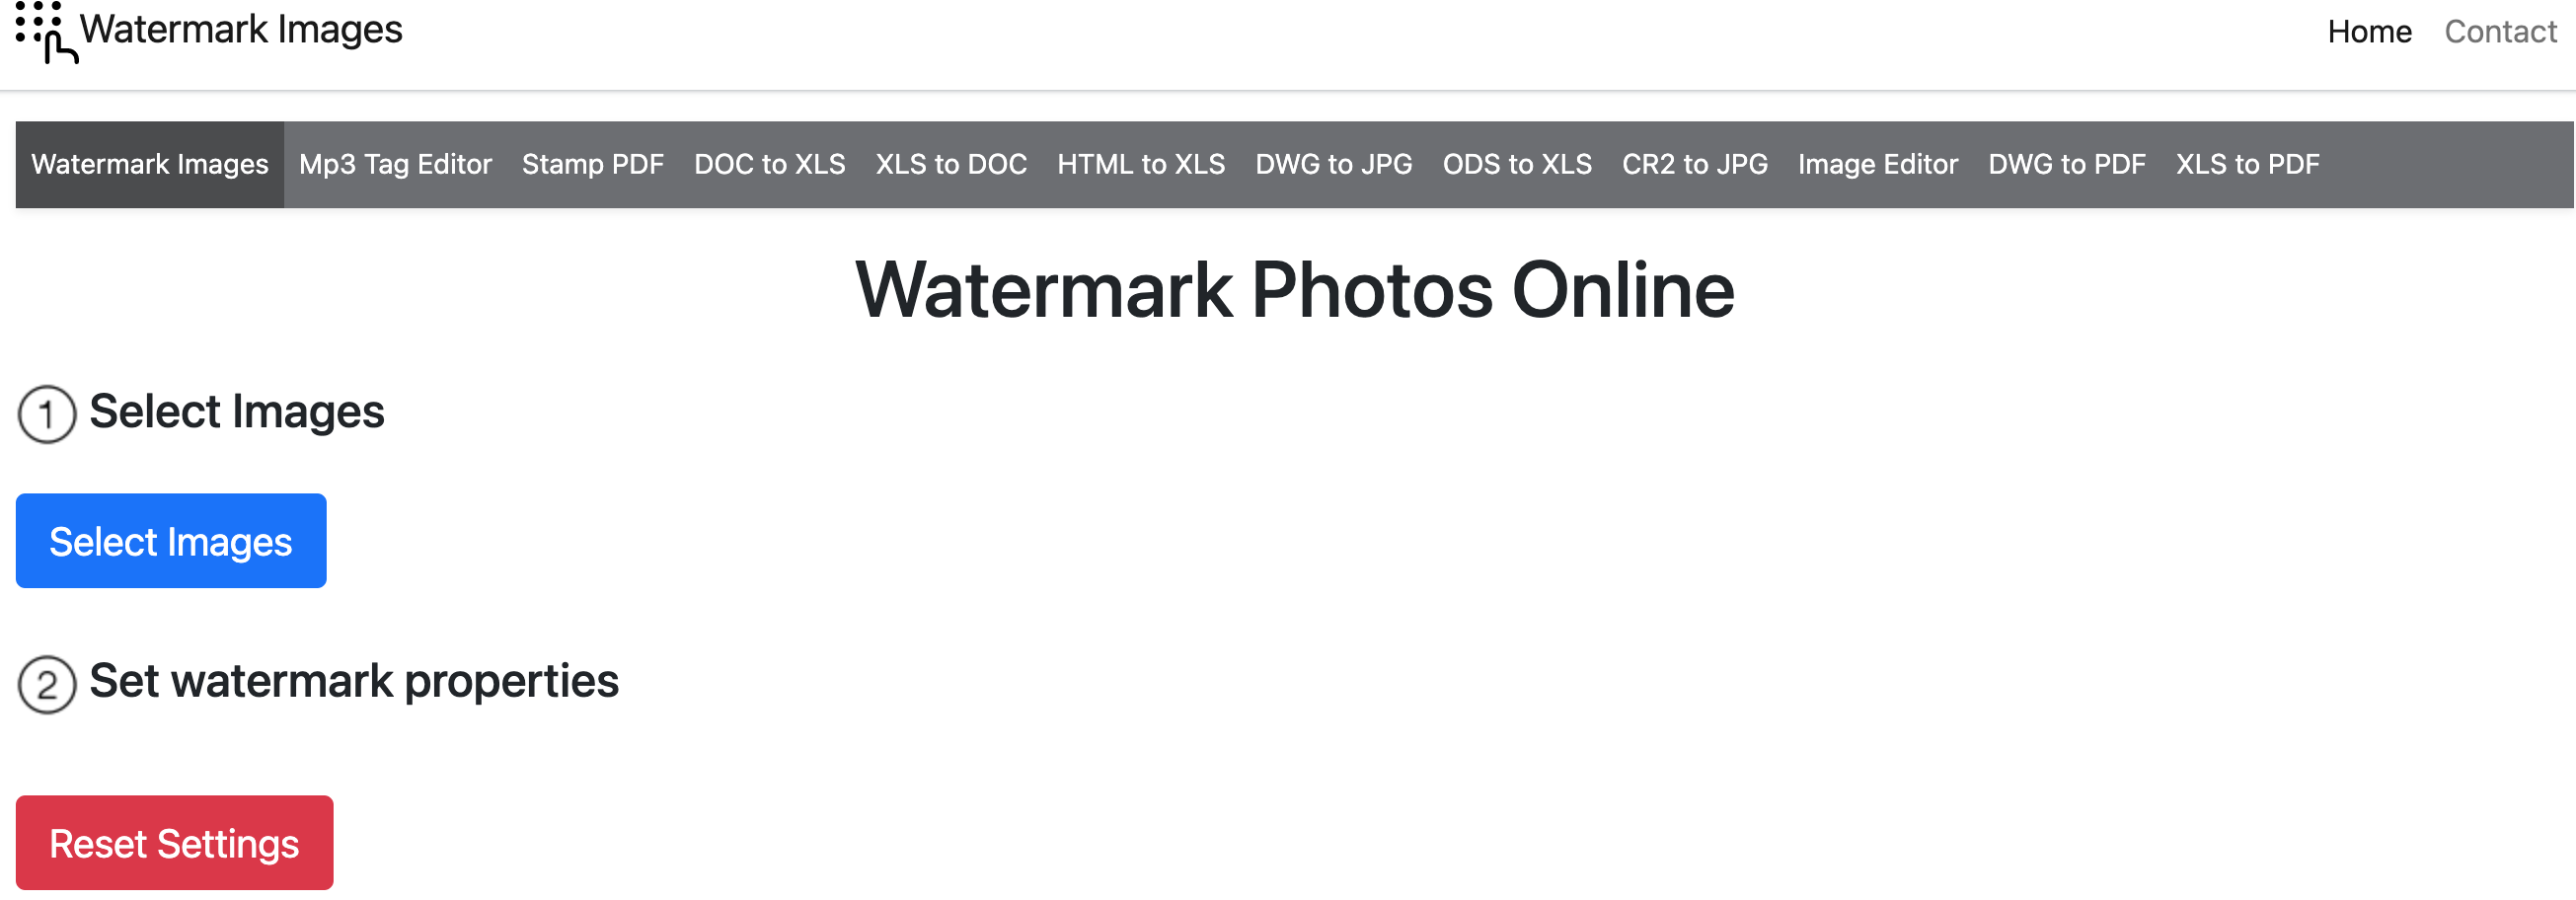 Watermark Images